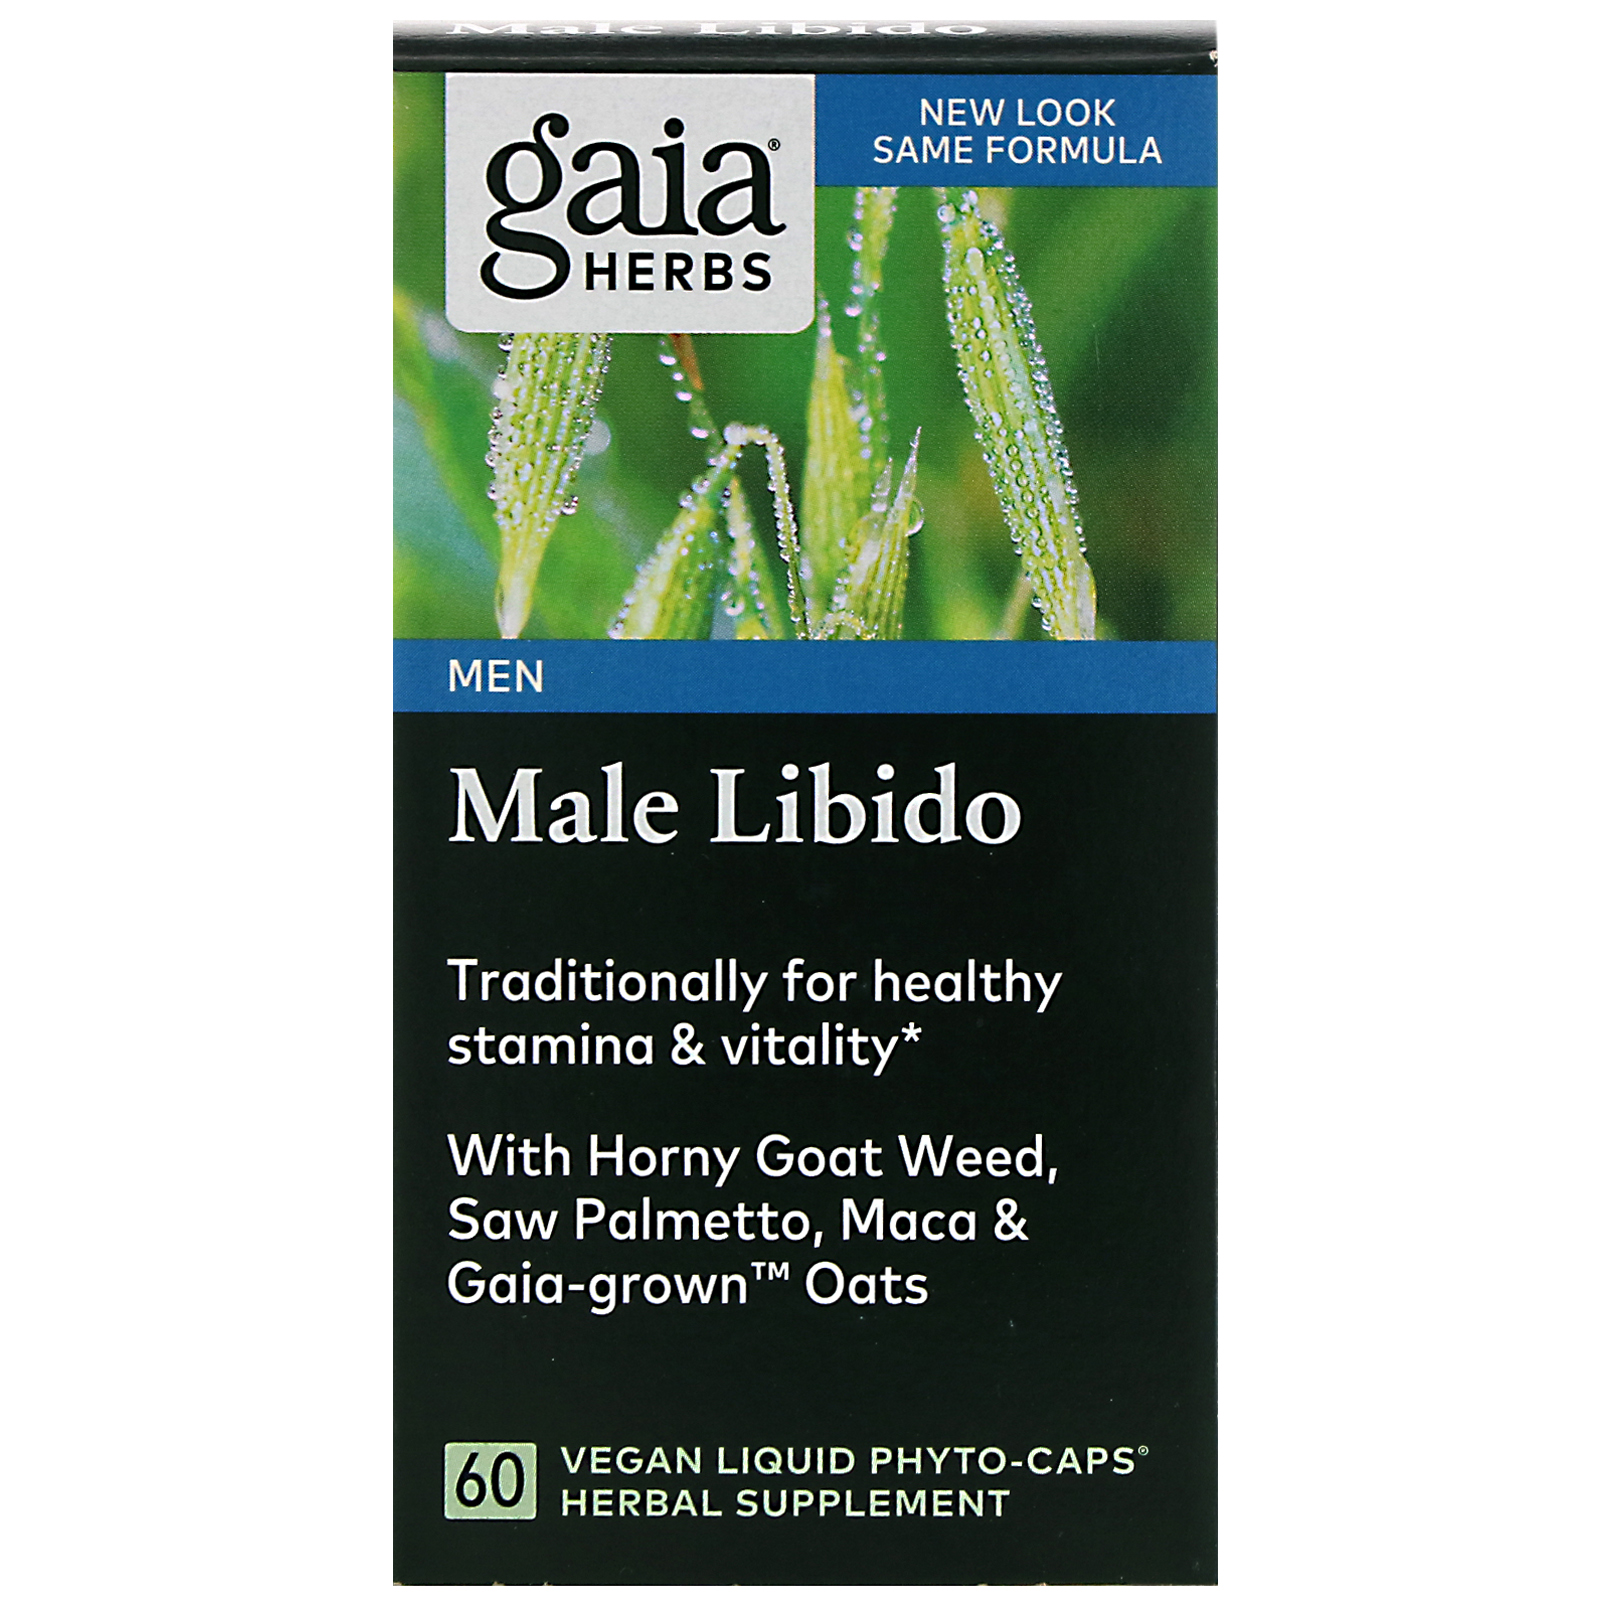 Gaia Herbs, Male Libido, 60 Vegan Liquid Phyto-Caps